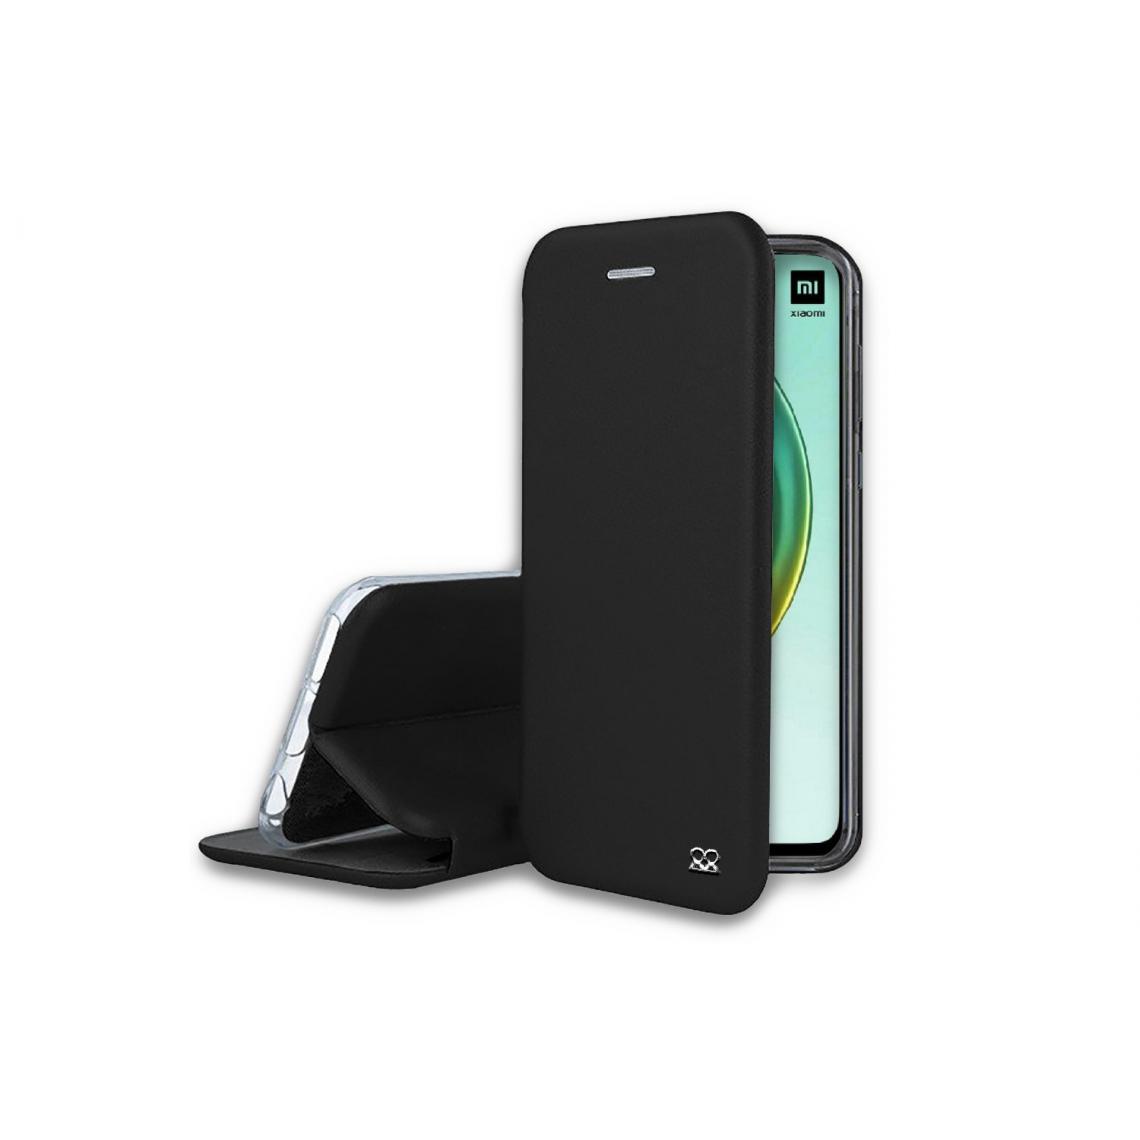 Ibroz - Ibroz Etui en cuir noir pour Xiaomi Mi - Coque, étui smartphone